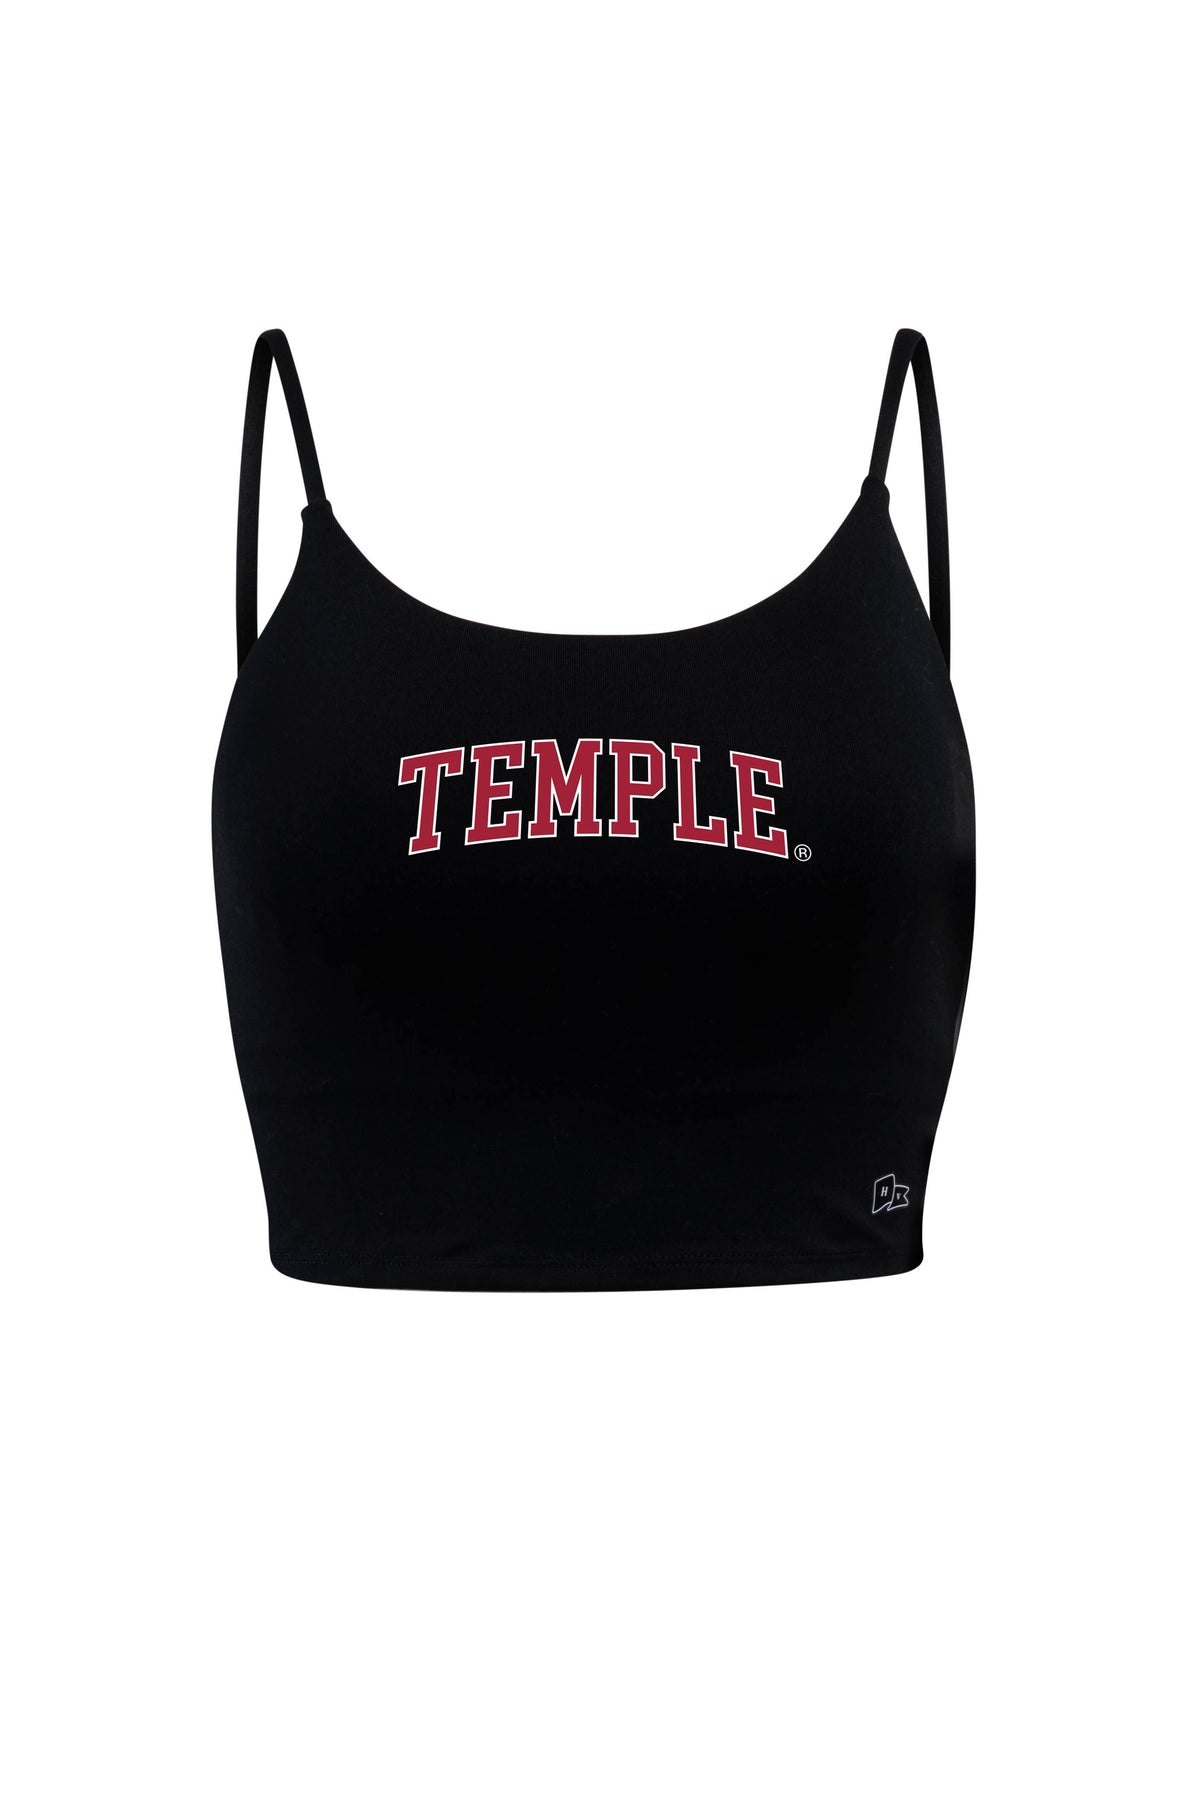 Temple University Bra Tank Top